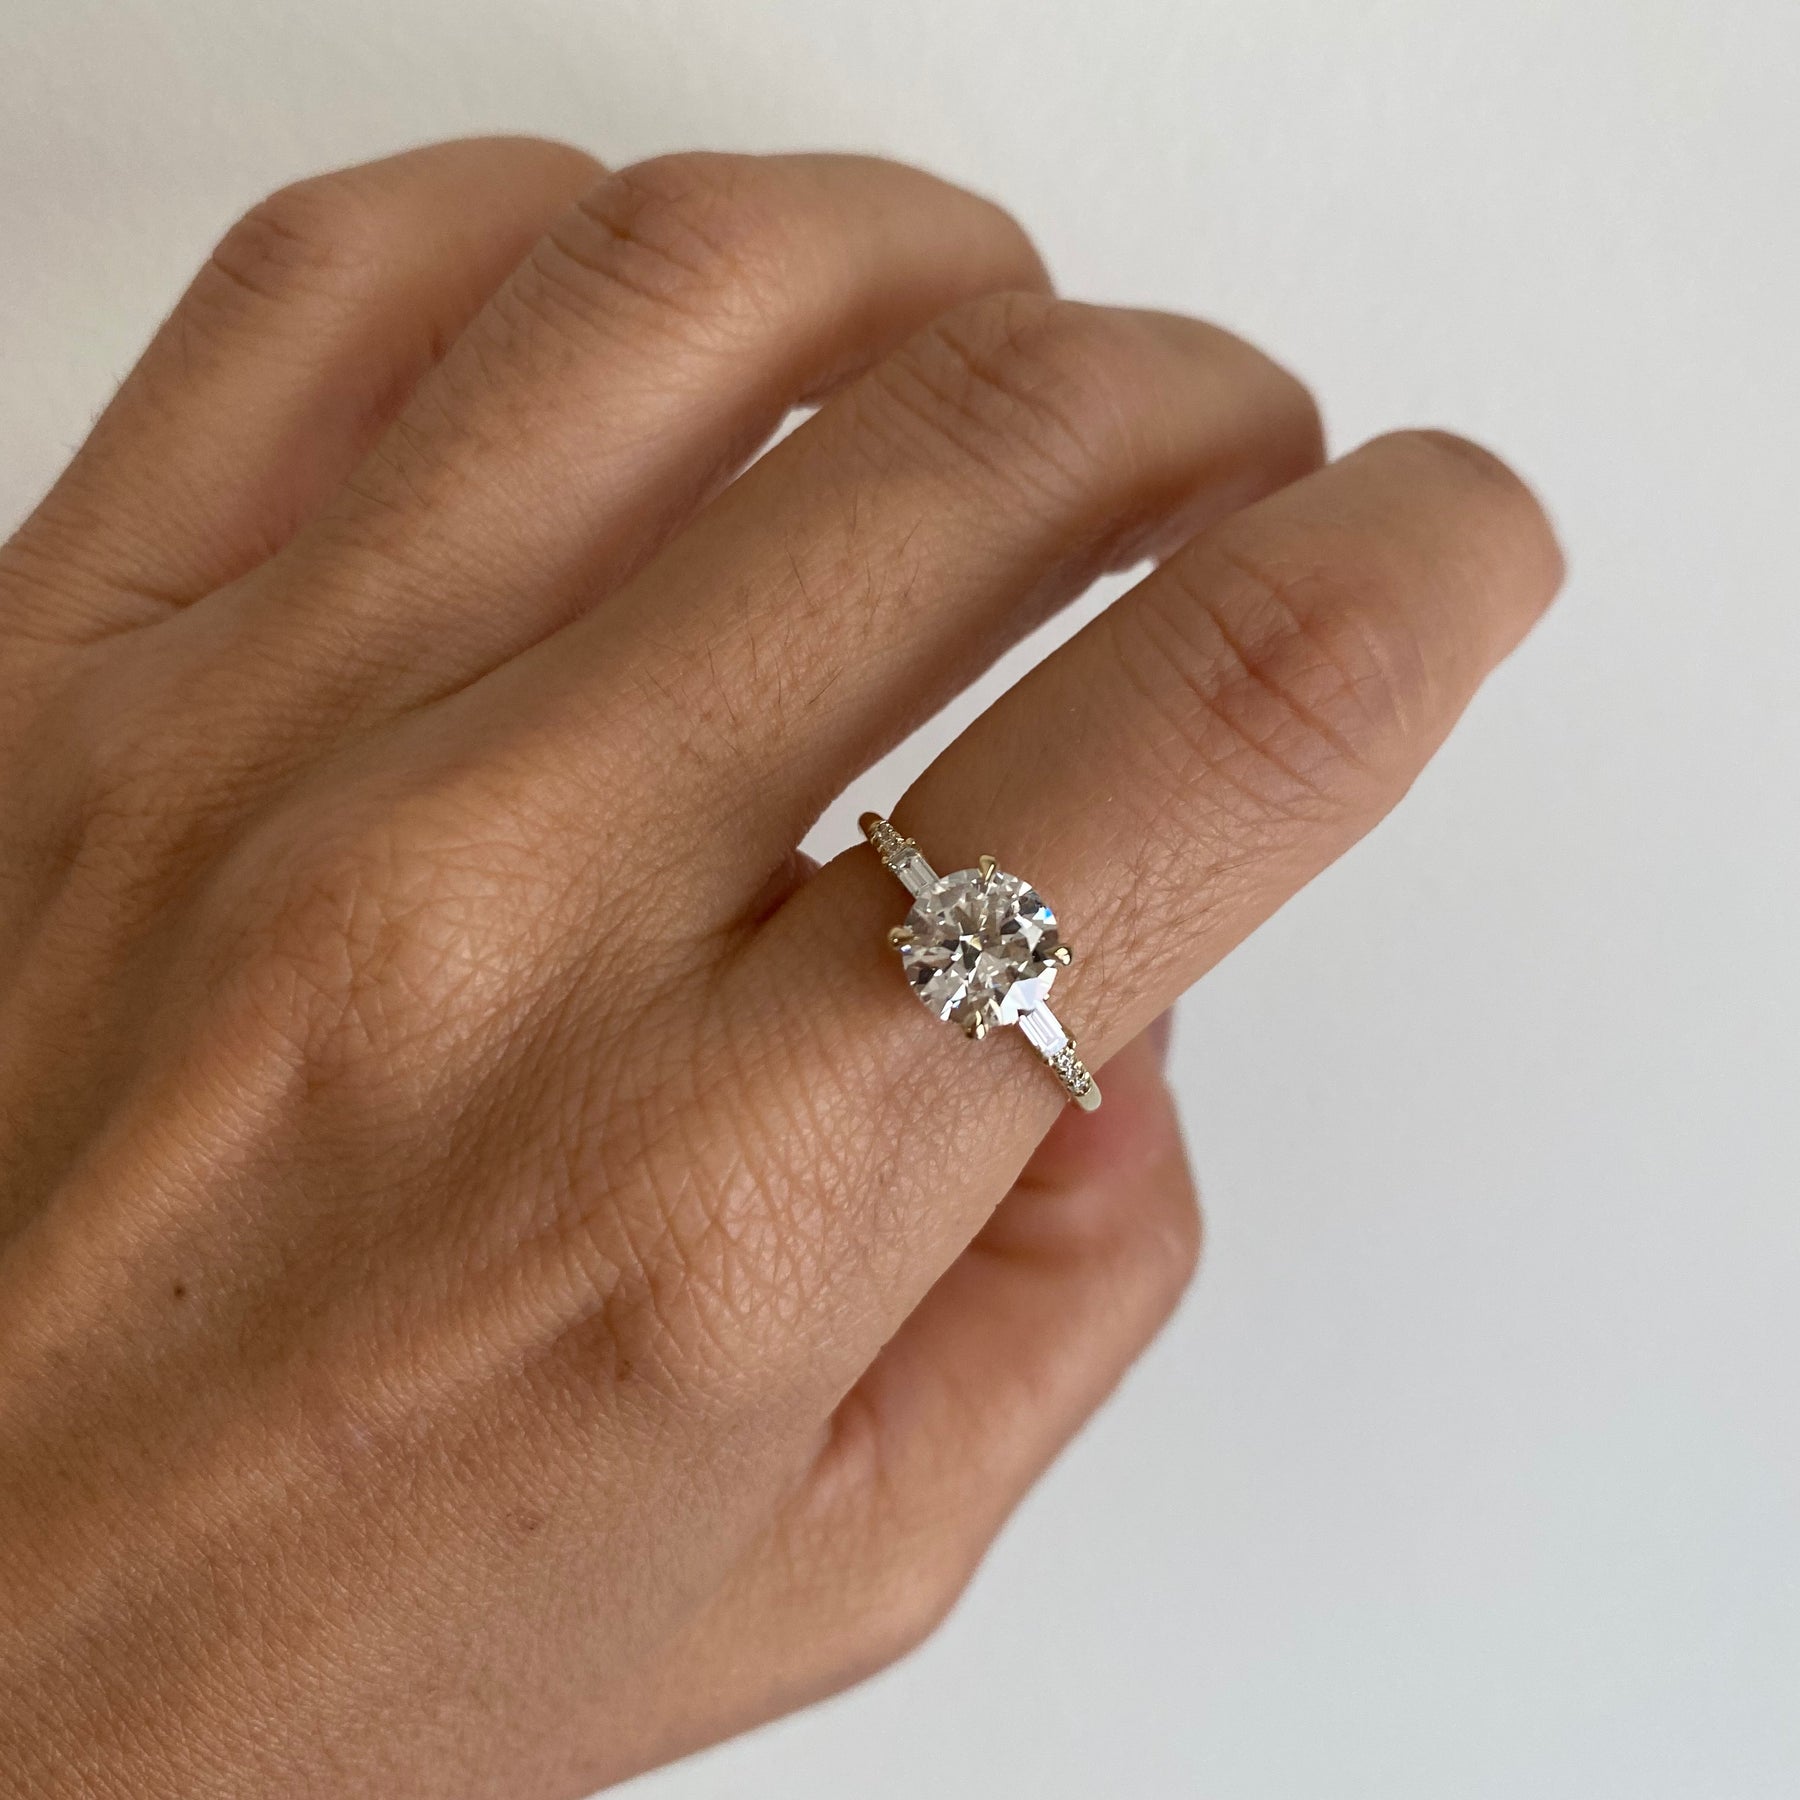 14k yellow gold custom engagement ring with brilliant cut white diamond center stone on hand